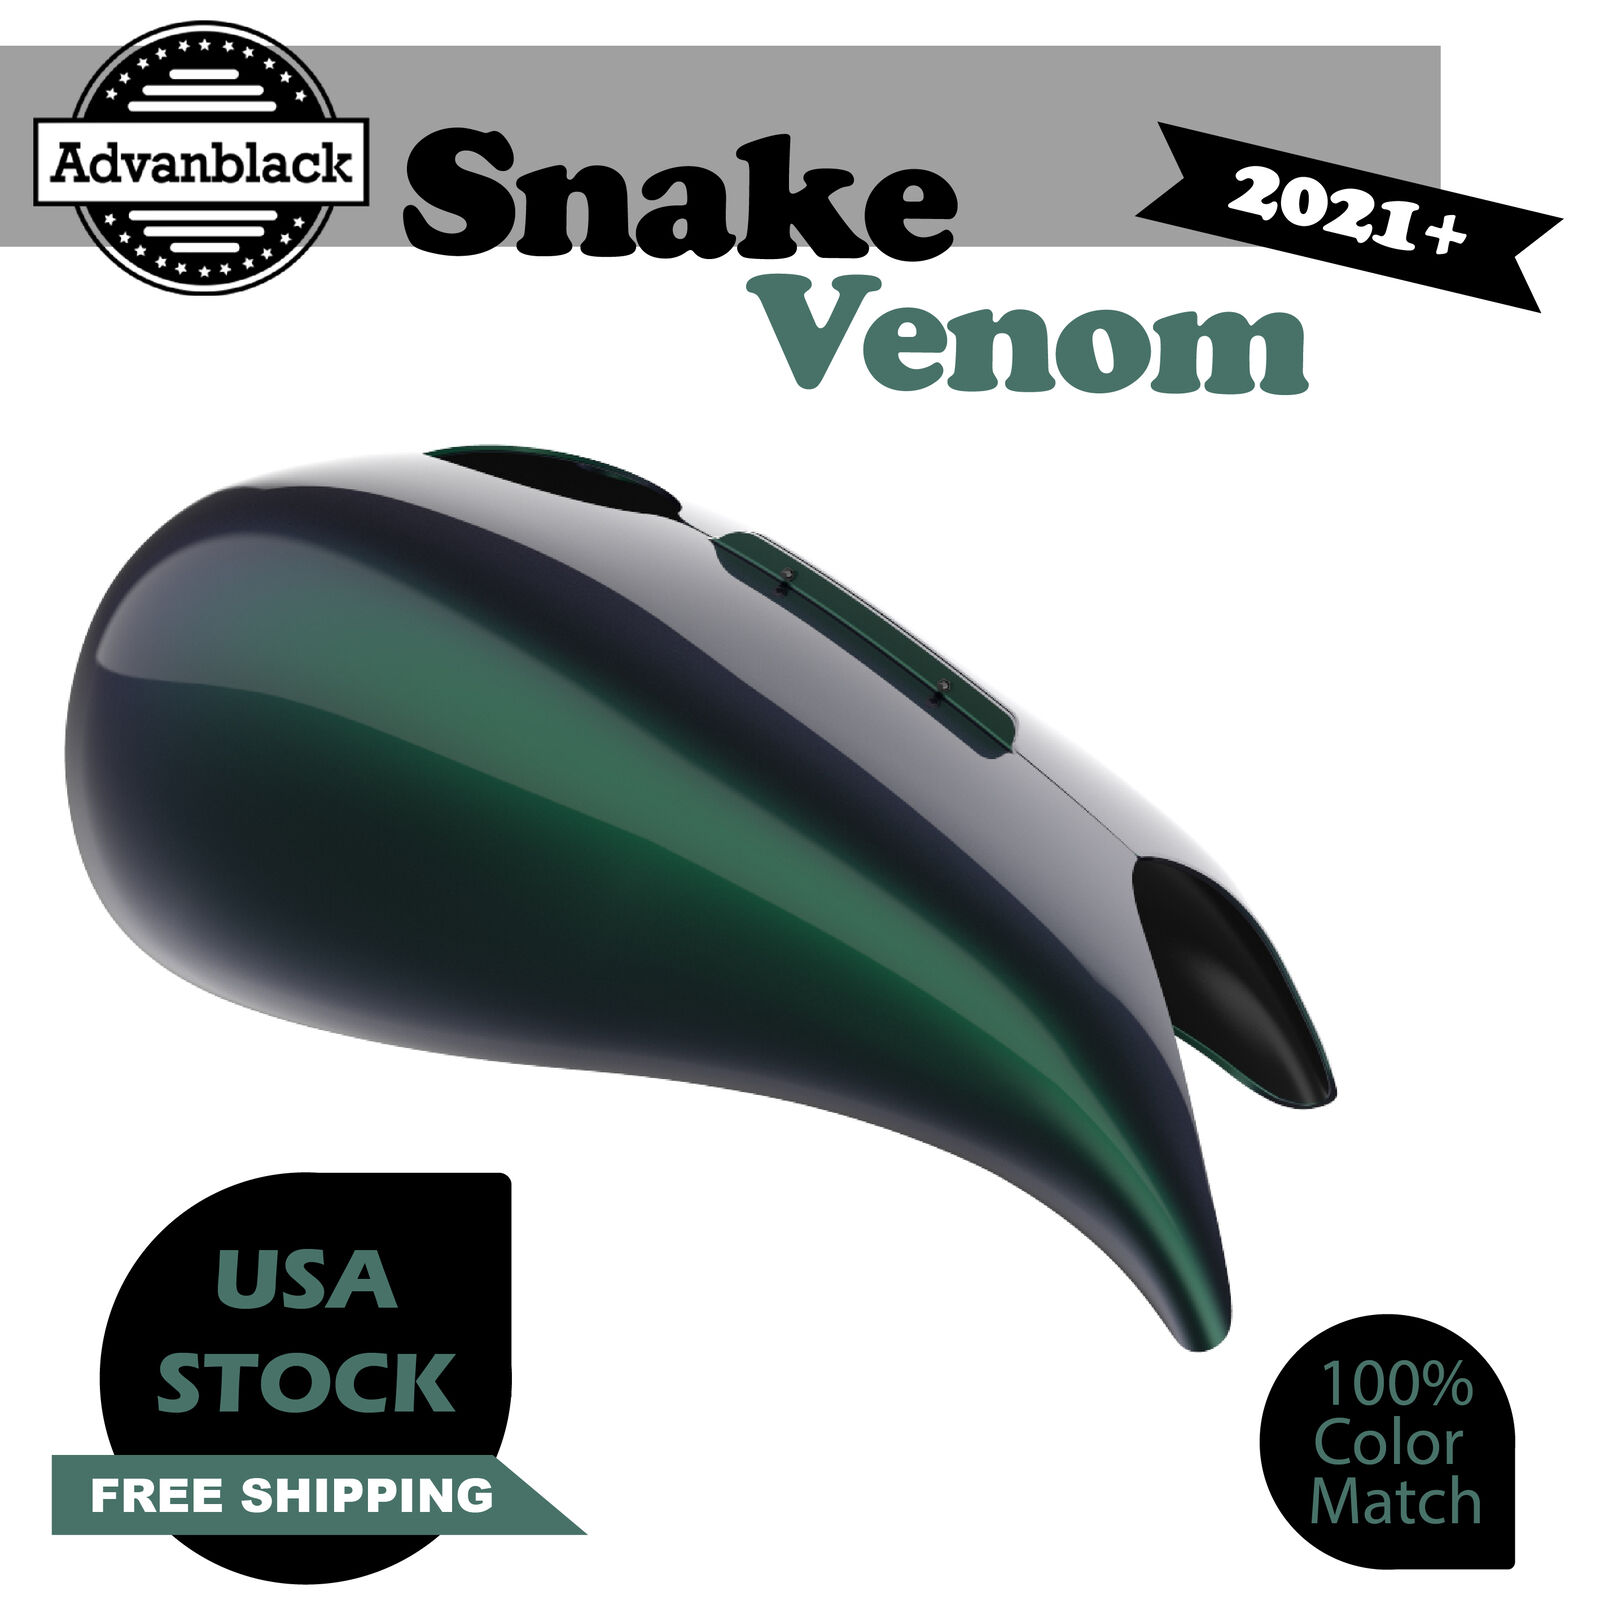 Advanblack Snake Venom Stretched Tank Cover Fits 21+ Harley Street Road Glide